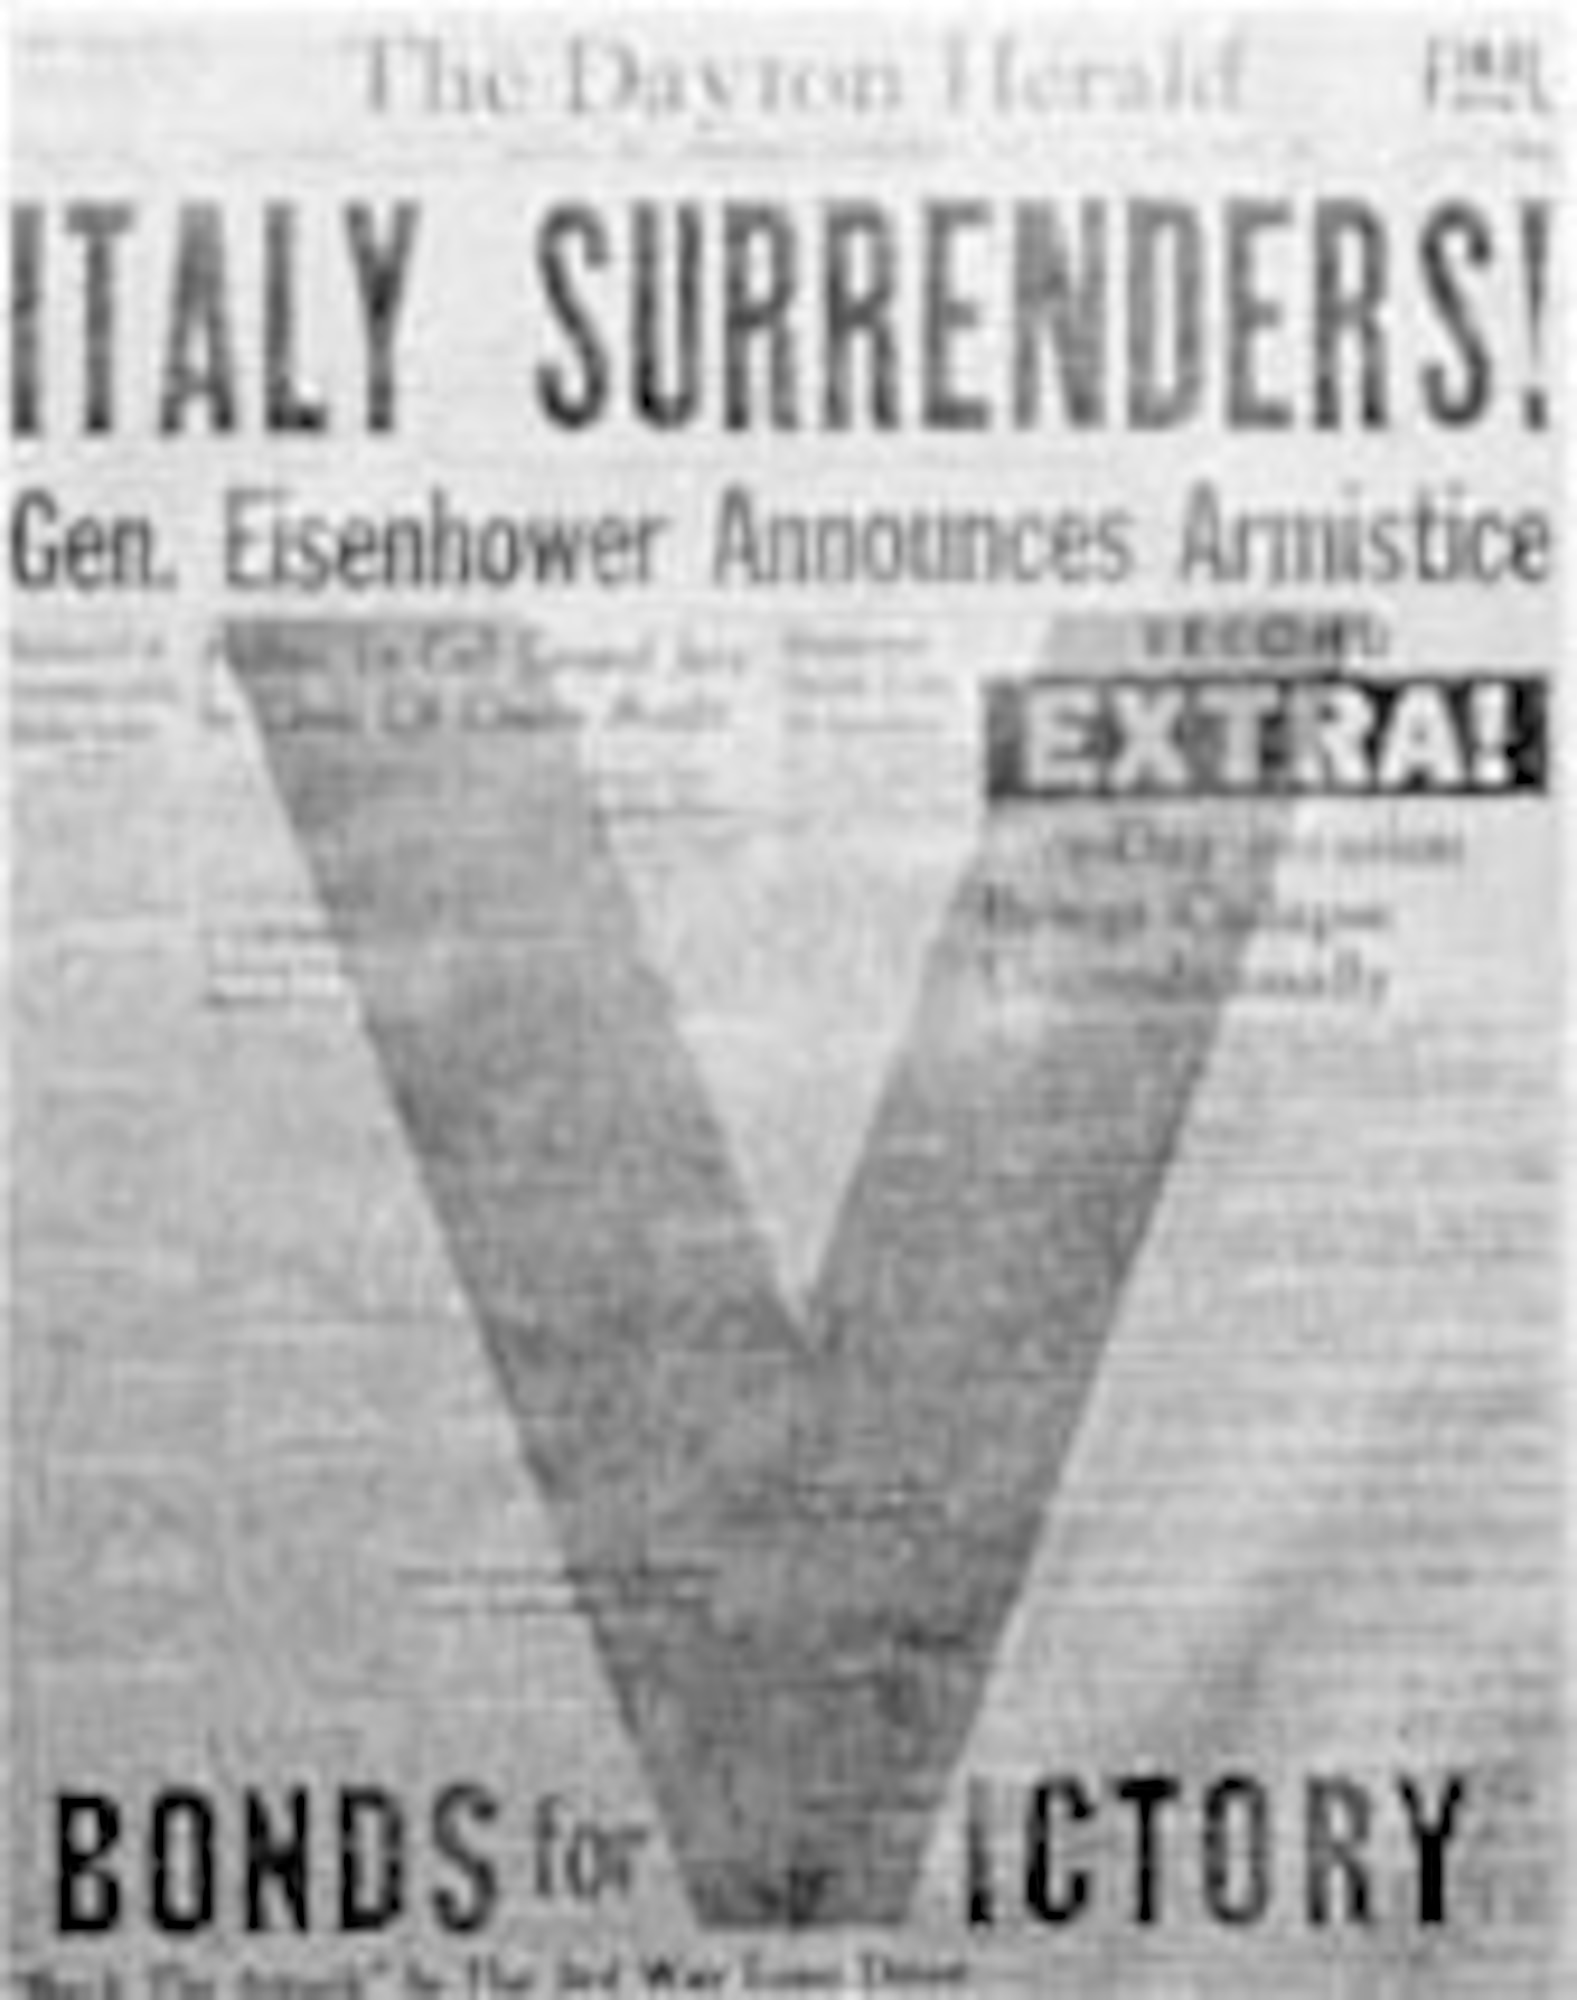 Italy Surrenders. (U.S. Air Force photo)